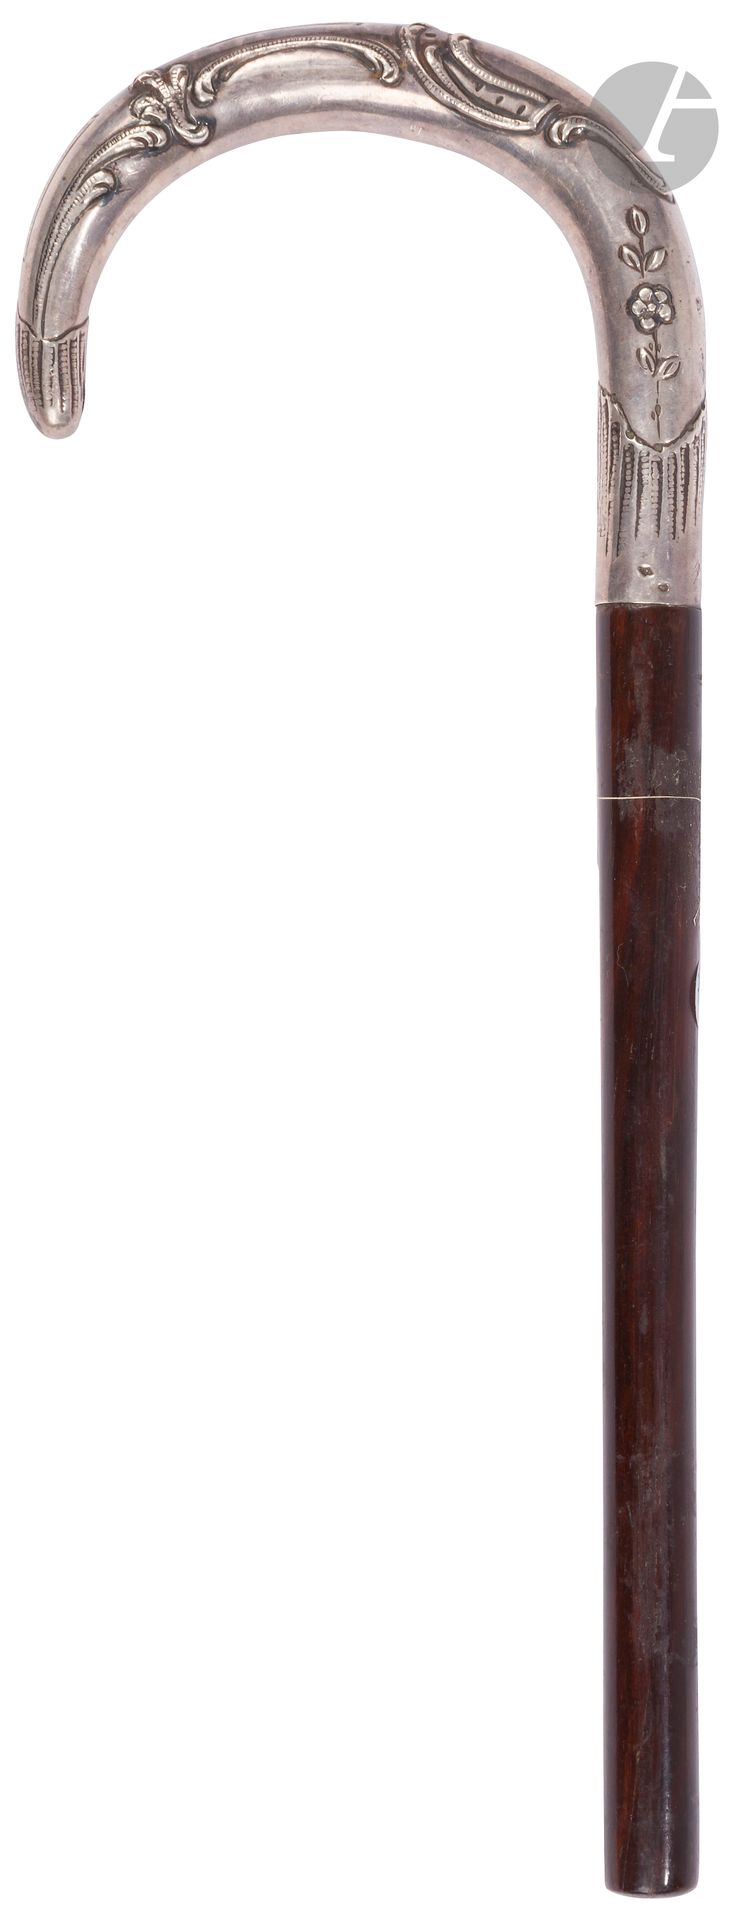 Null 银色压印的米洛德手柄手杖。
长度：22厘米（轴切）。